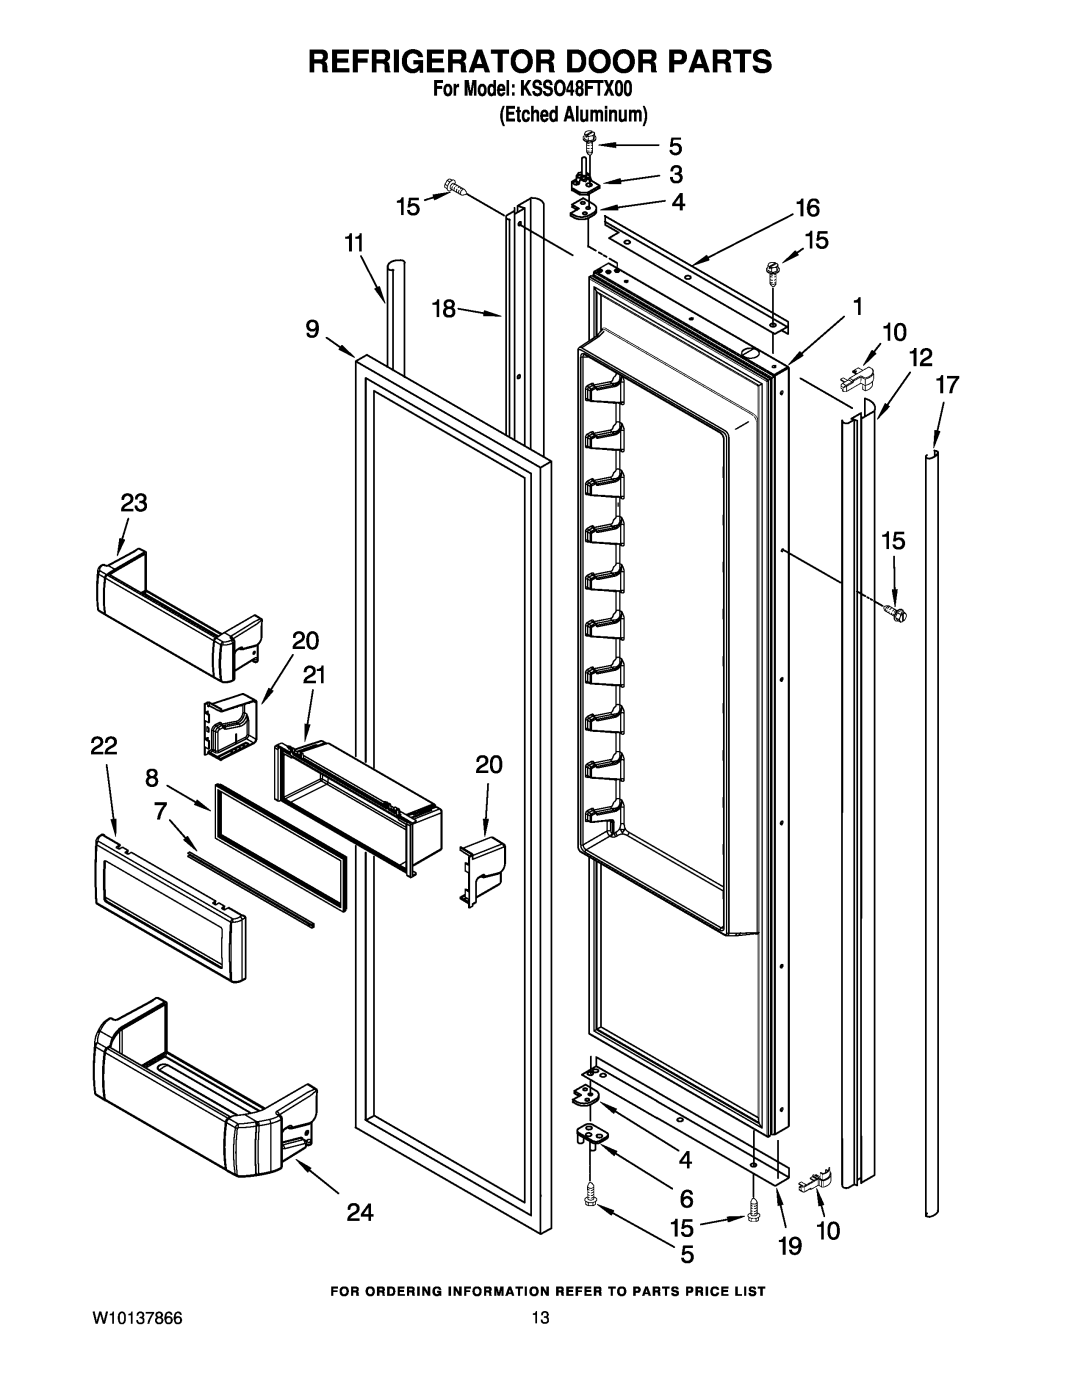 KitchenAid manual Refrigerator Door Parts, W10137866, For Model KSSO48FTX00 Etched Aluminum 